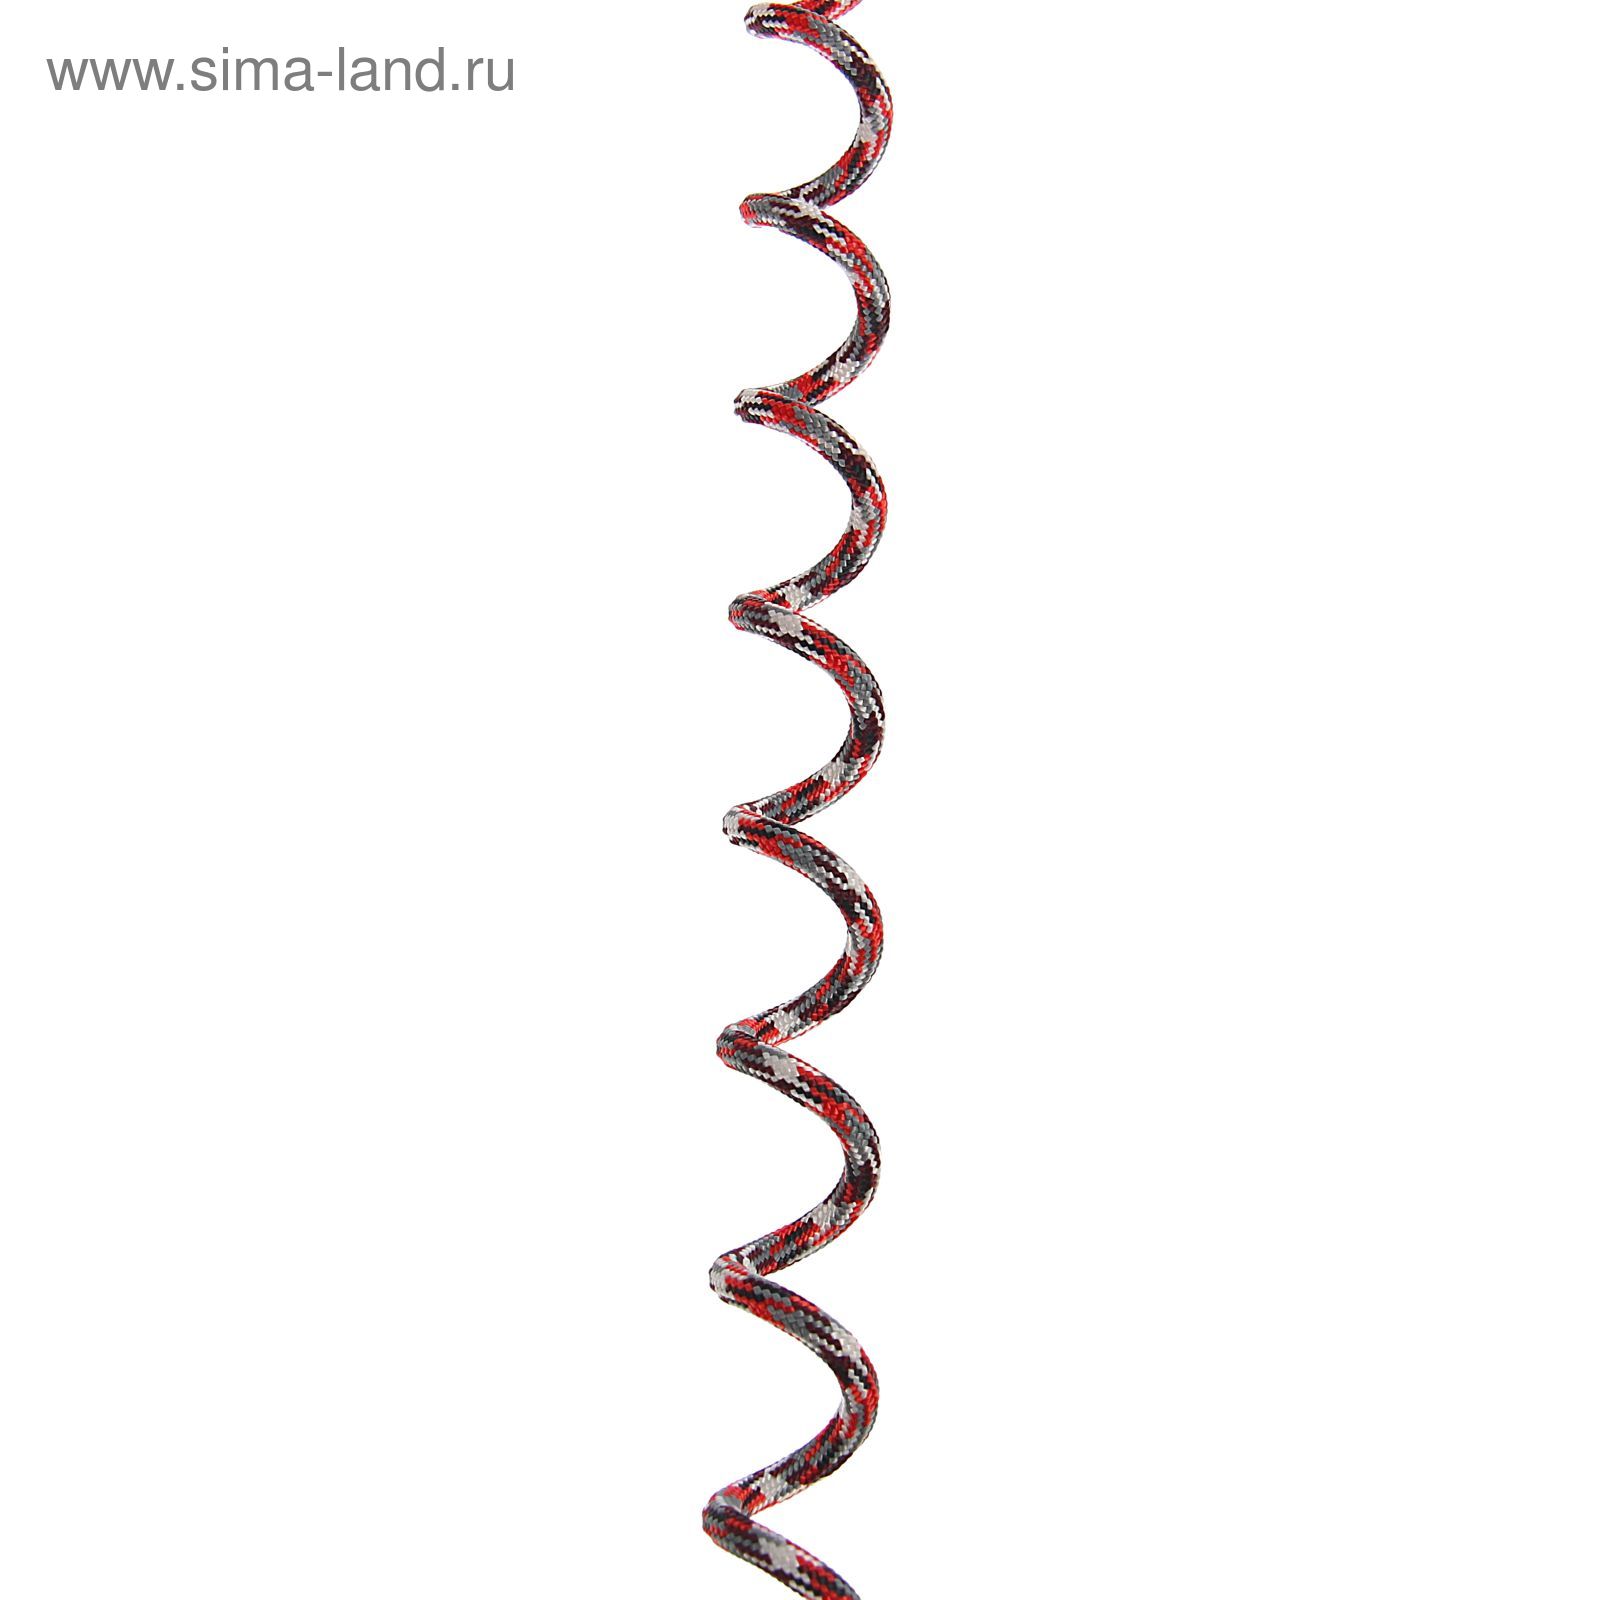 Спиралевидный страховочный шнур Red camo